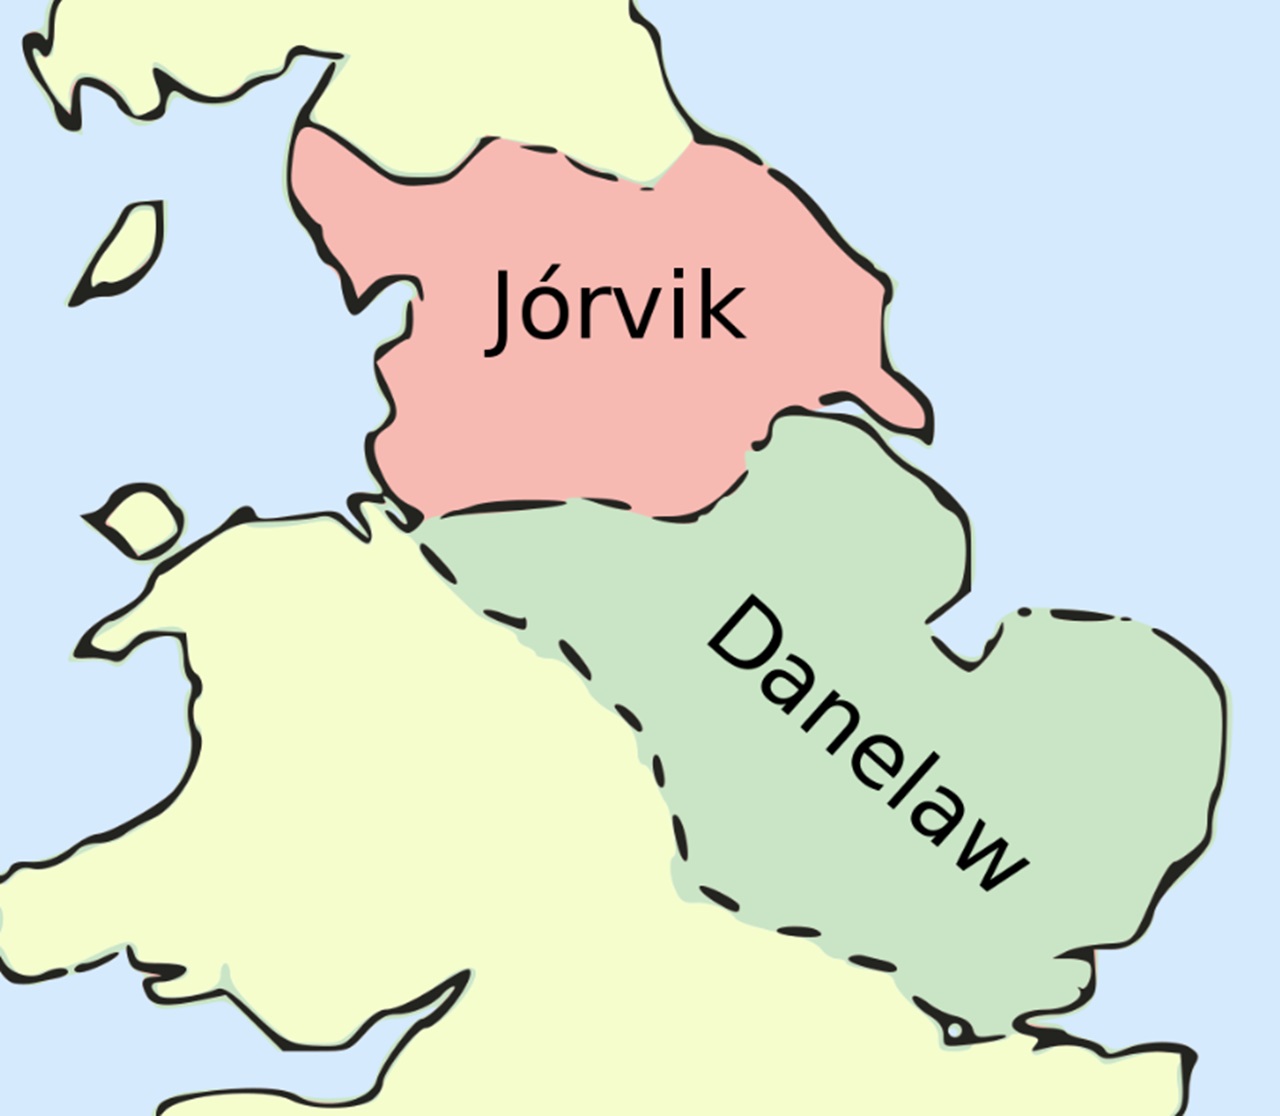 coprolite di York regno di Jorvik